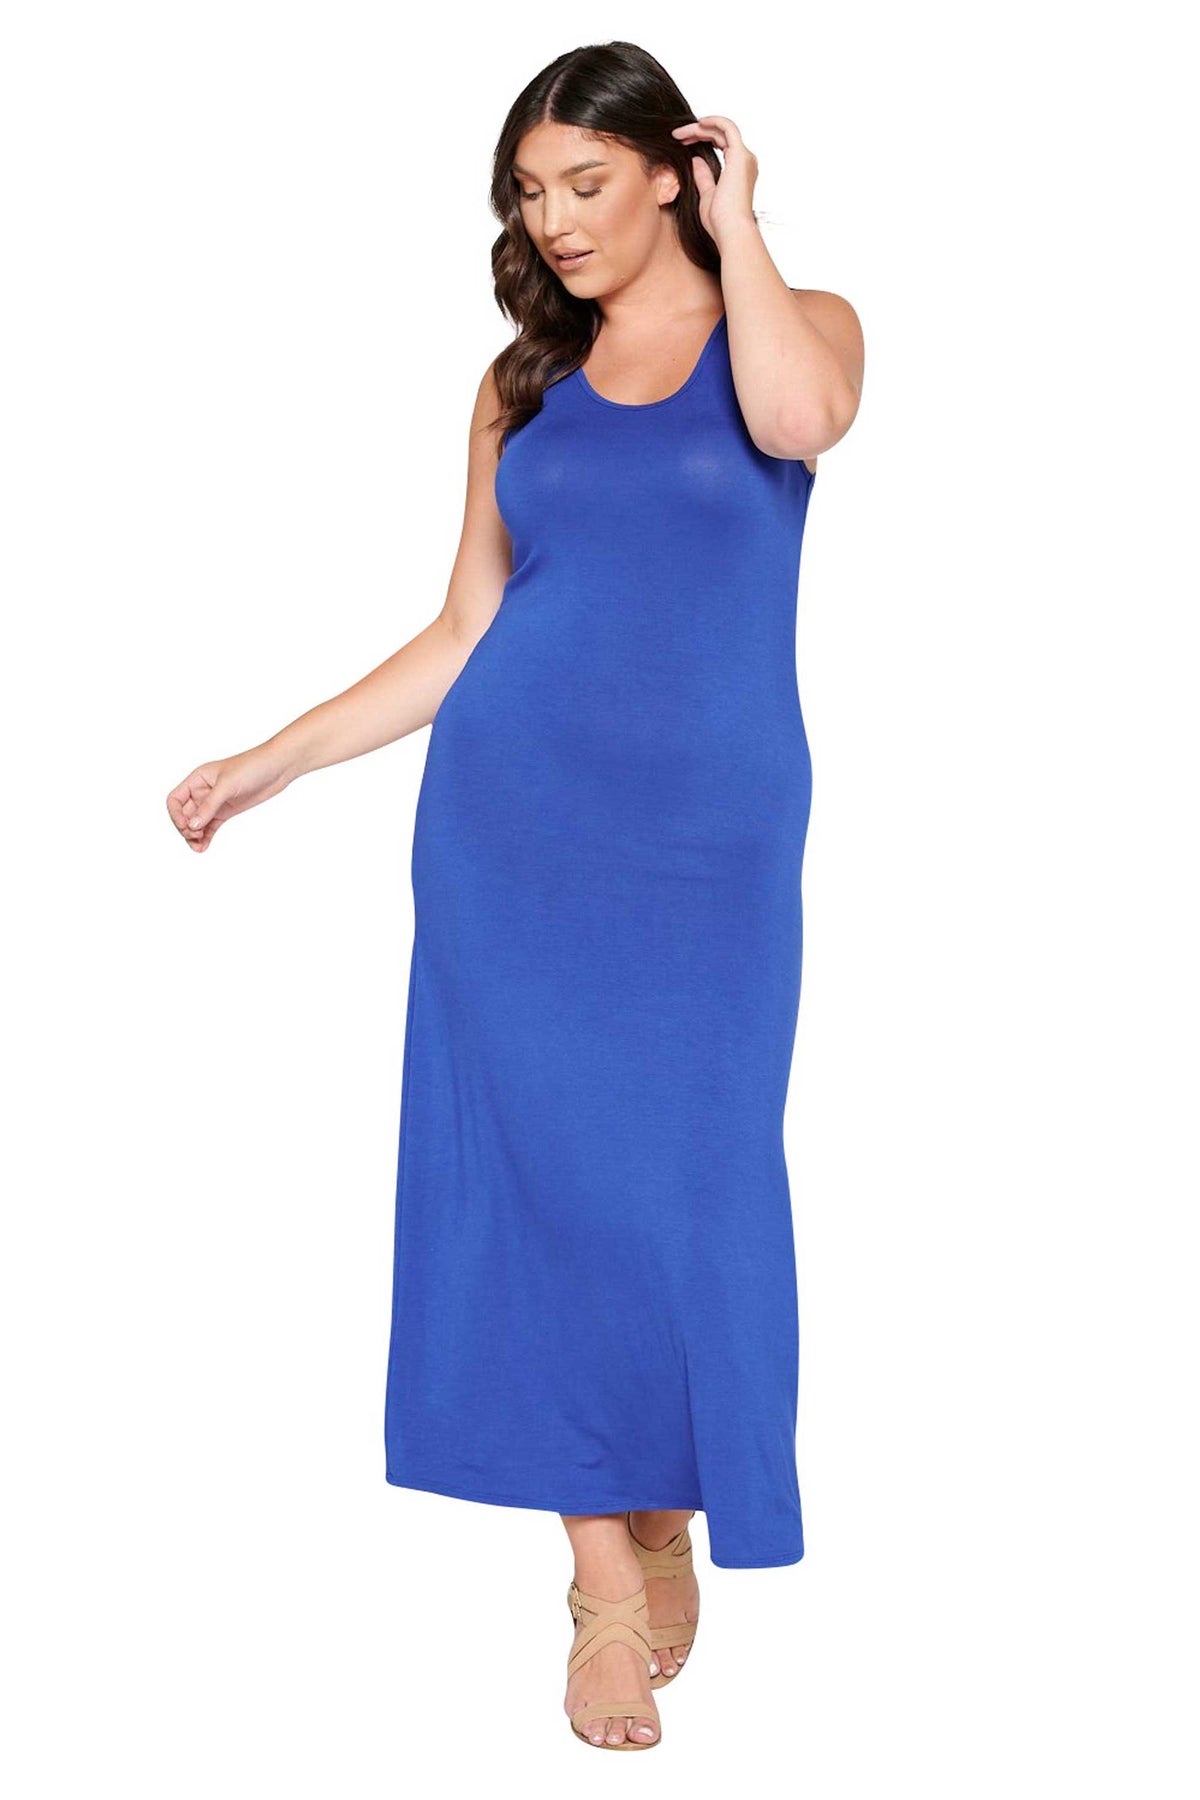 livd L I V D women's trendy contemporary plus size tank sleeveless bodycon midi dress in ink royal blue